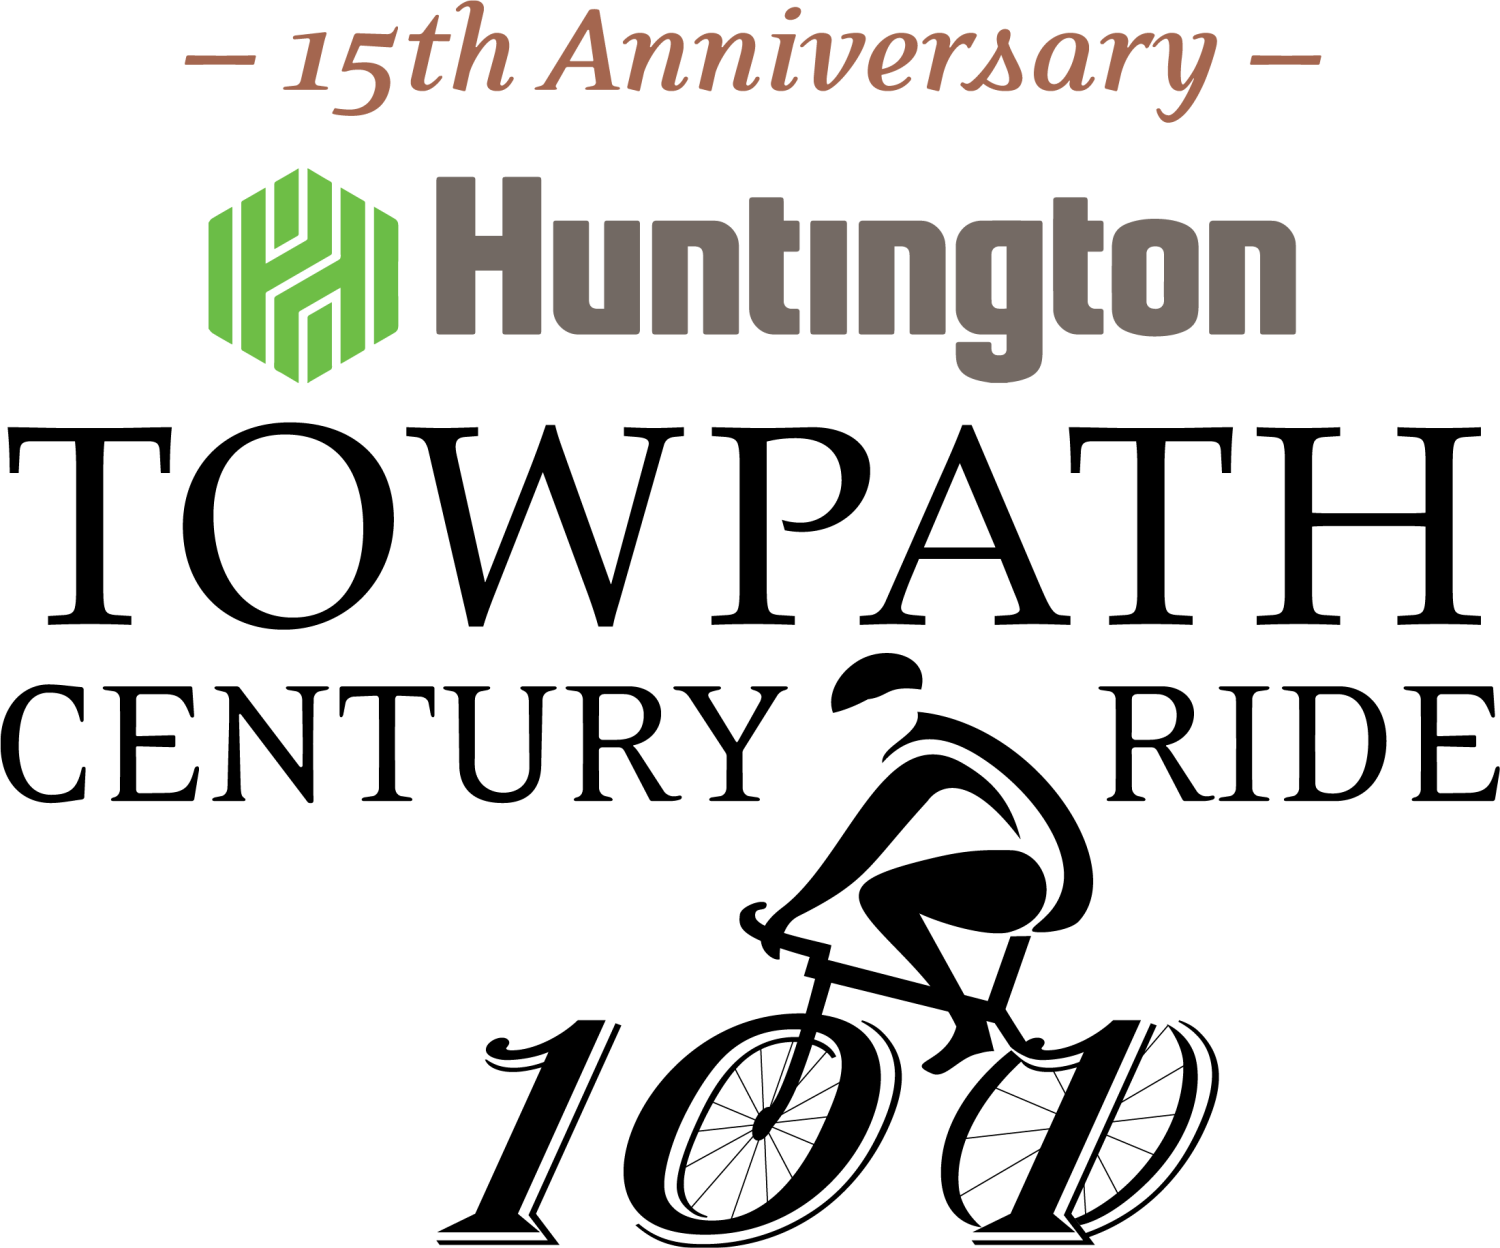 Huntington Towpath Century Ride 15th Anniversary logo